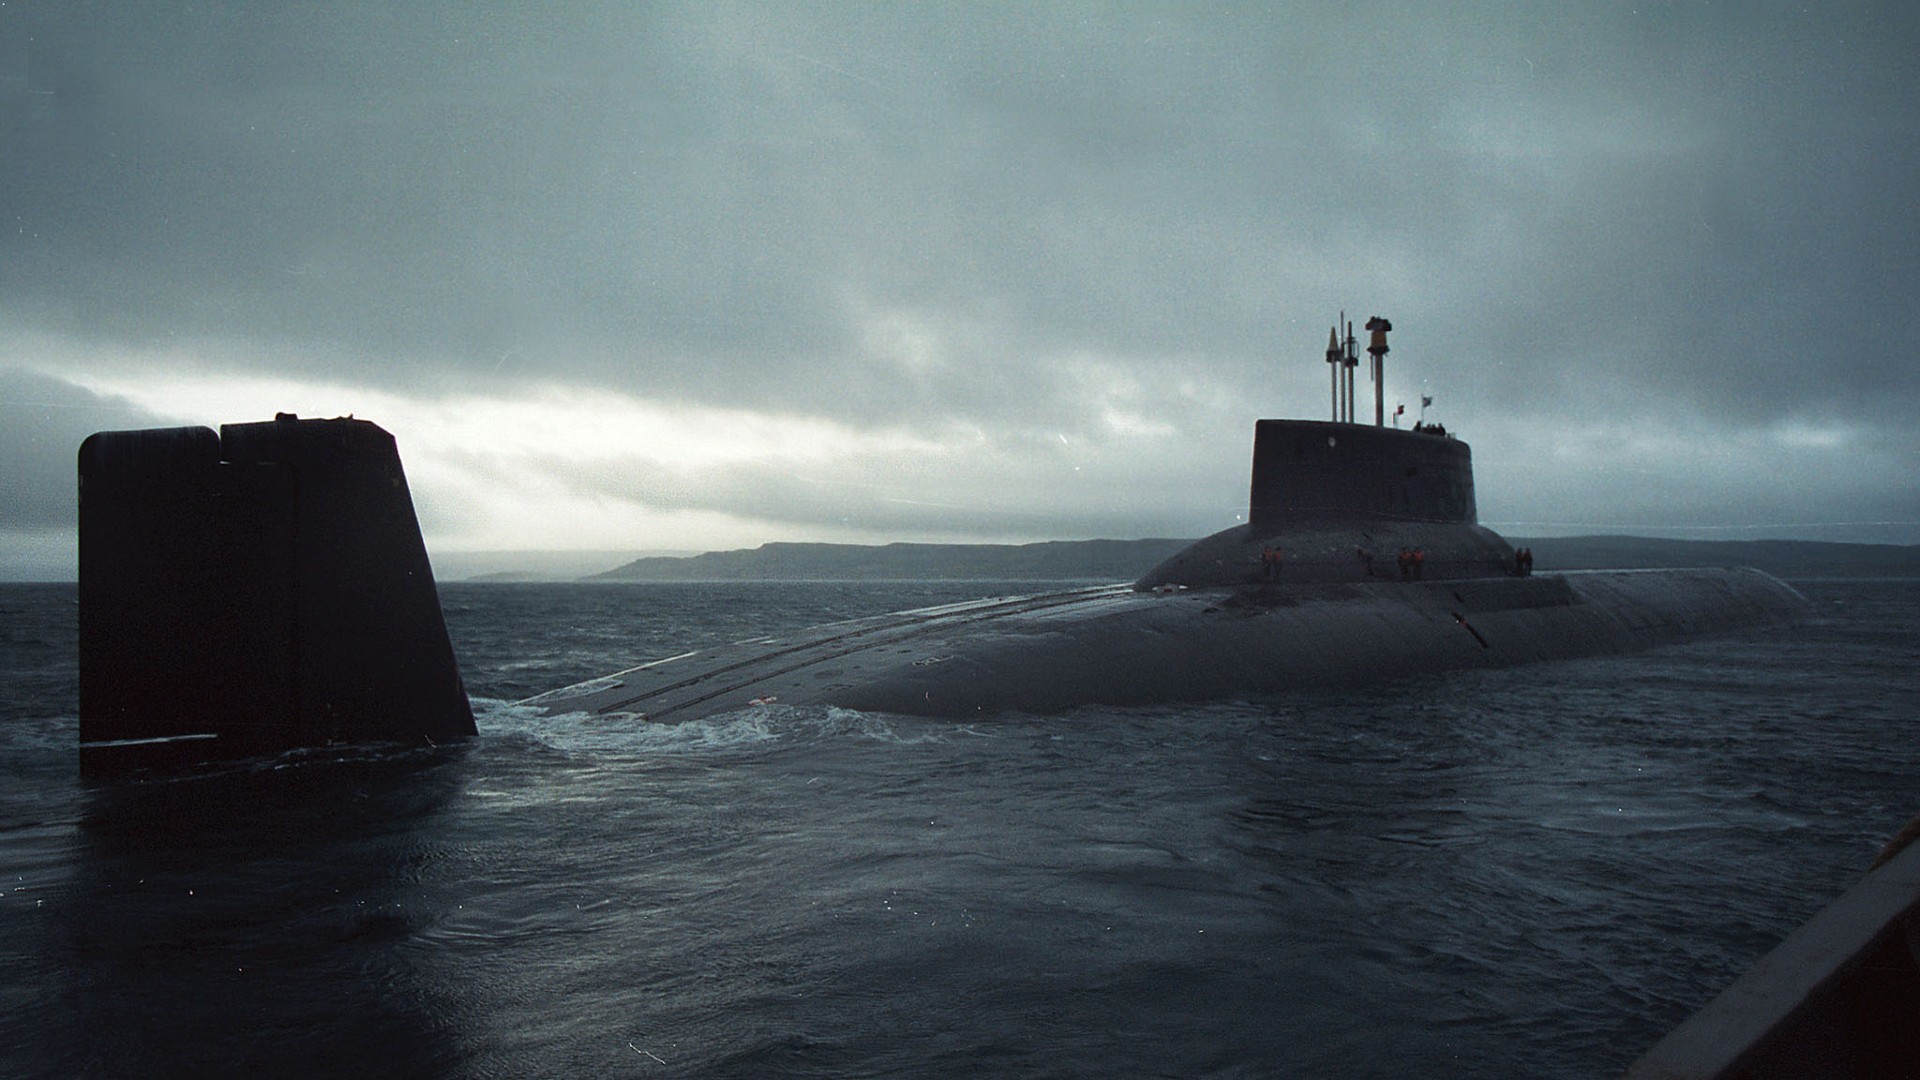 General 1920x1080 military submarine Russian Navy navy vehicle sea